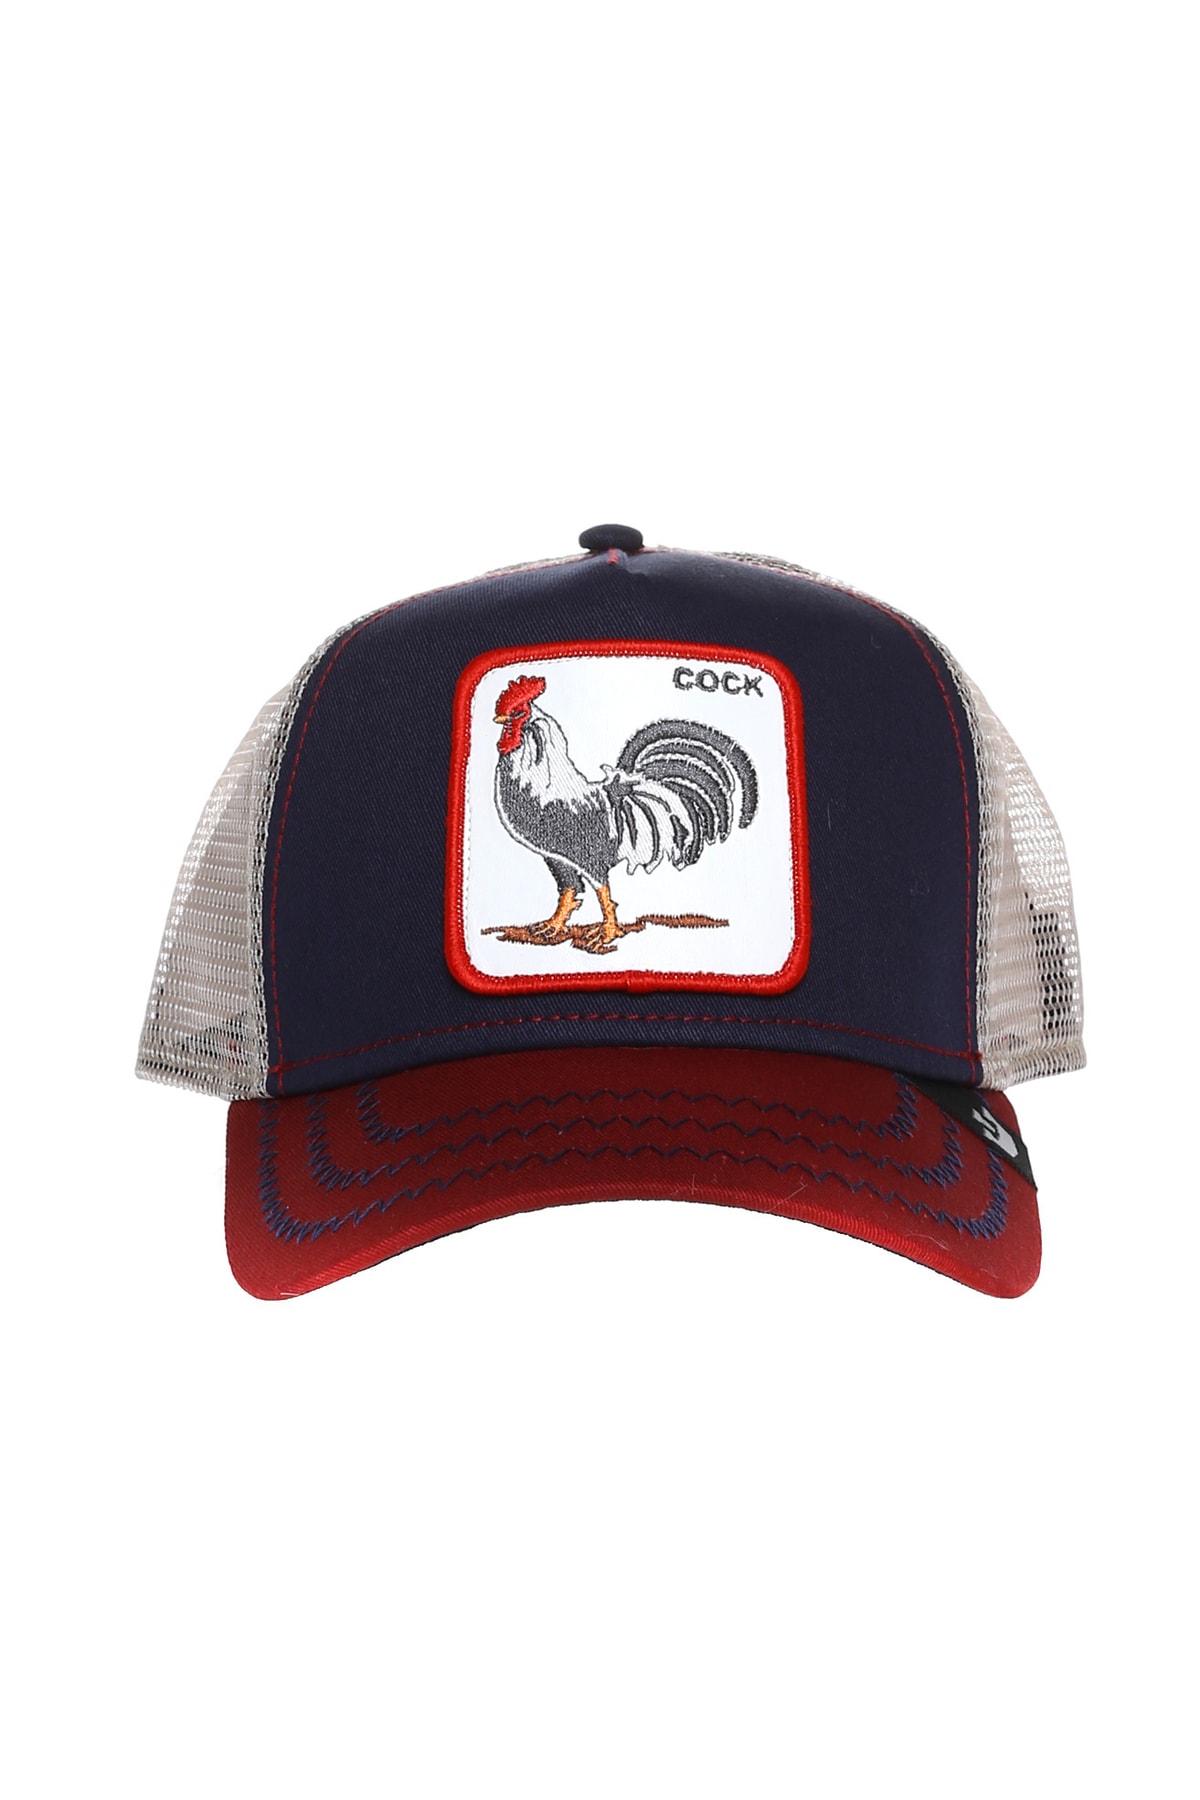 Goorin Bros Lacivert Unisex Şapka 101-2548 All American Rooster